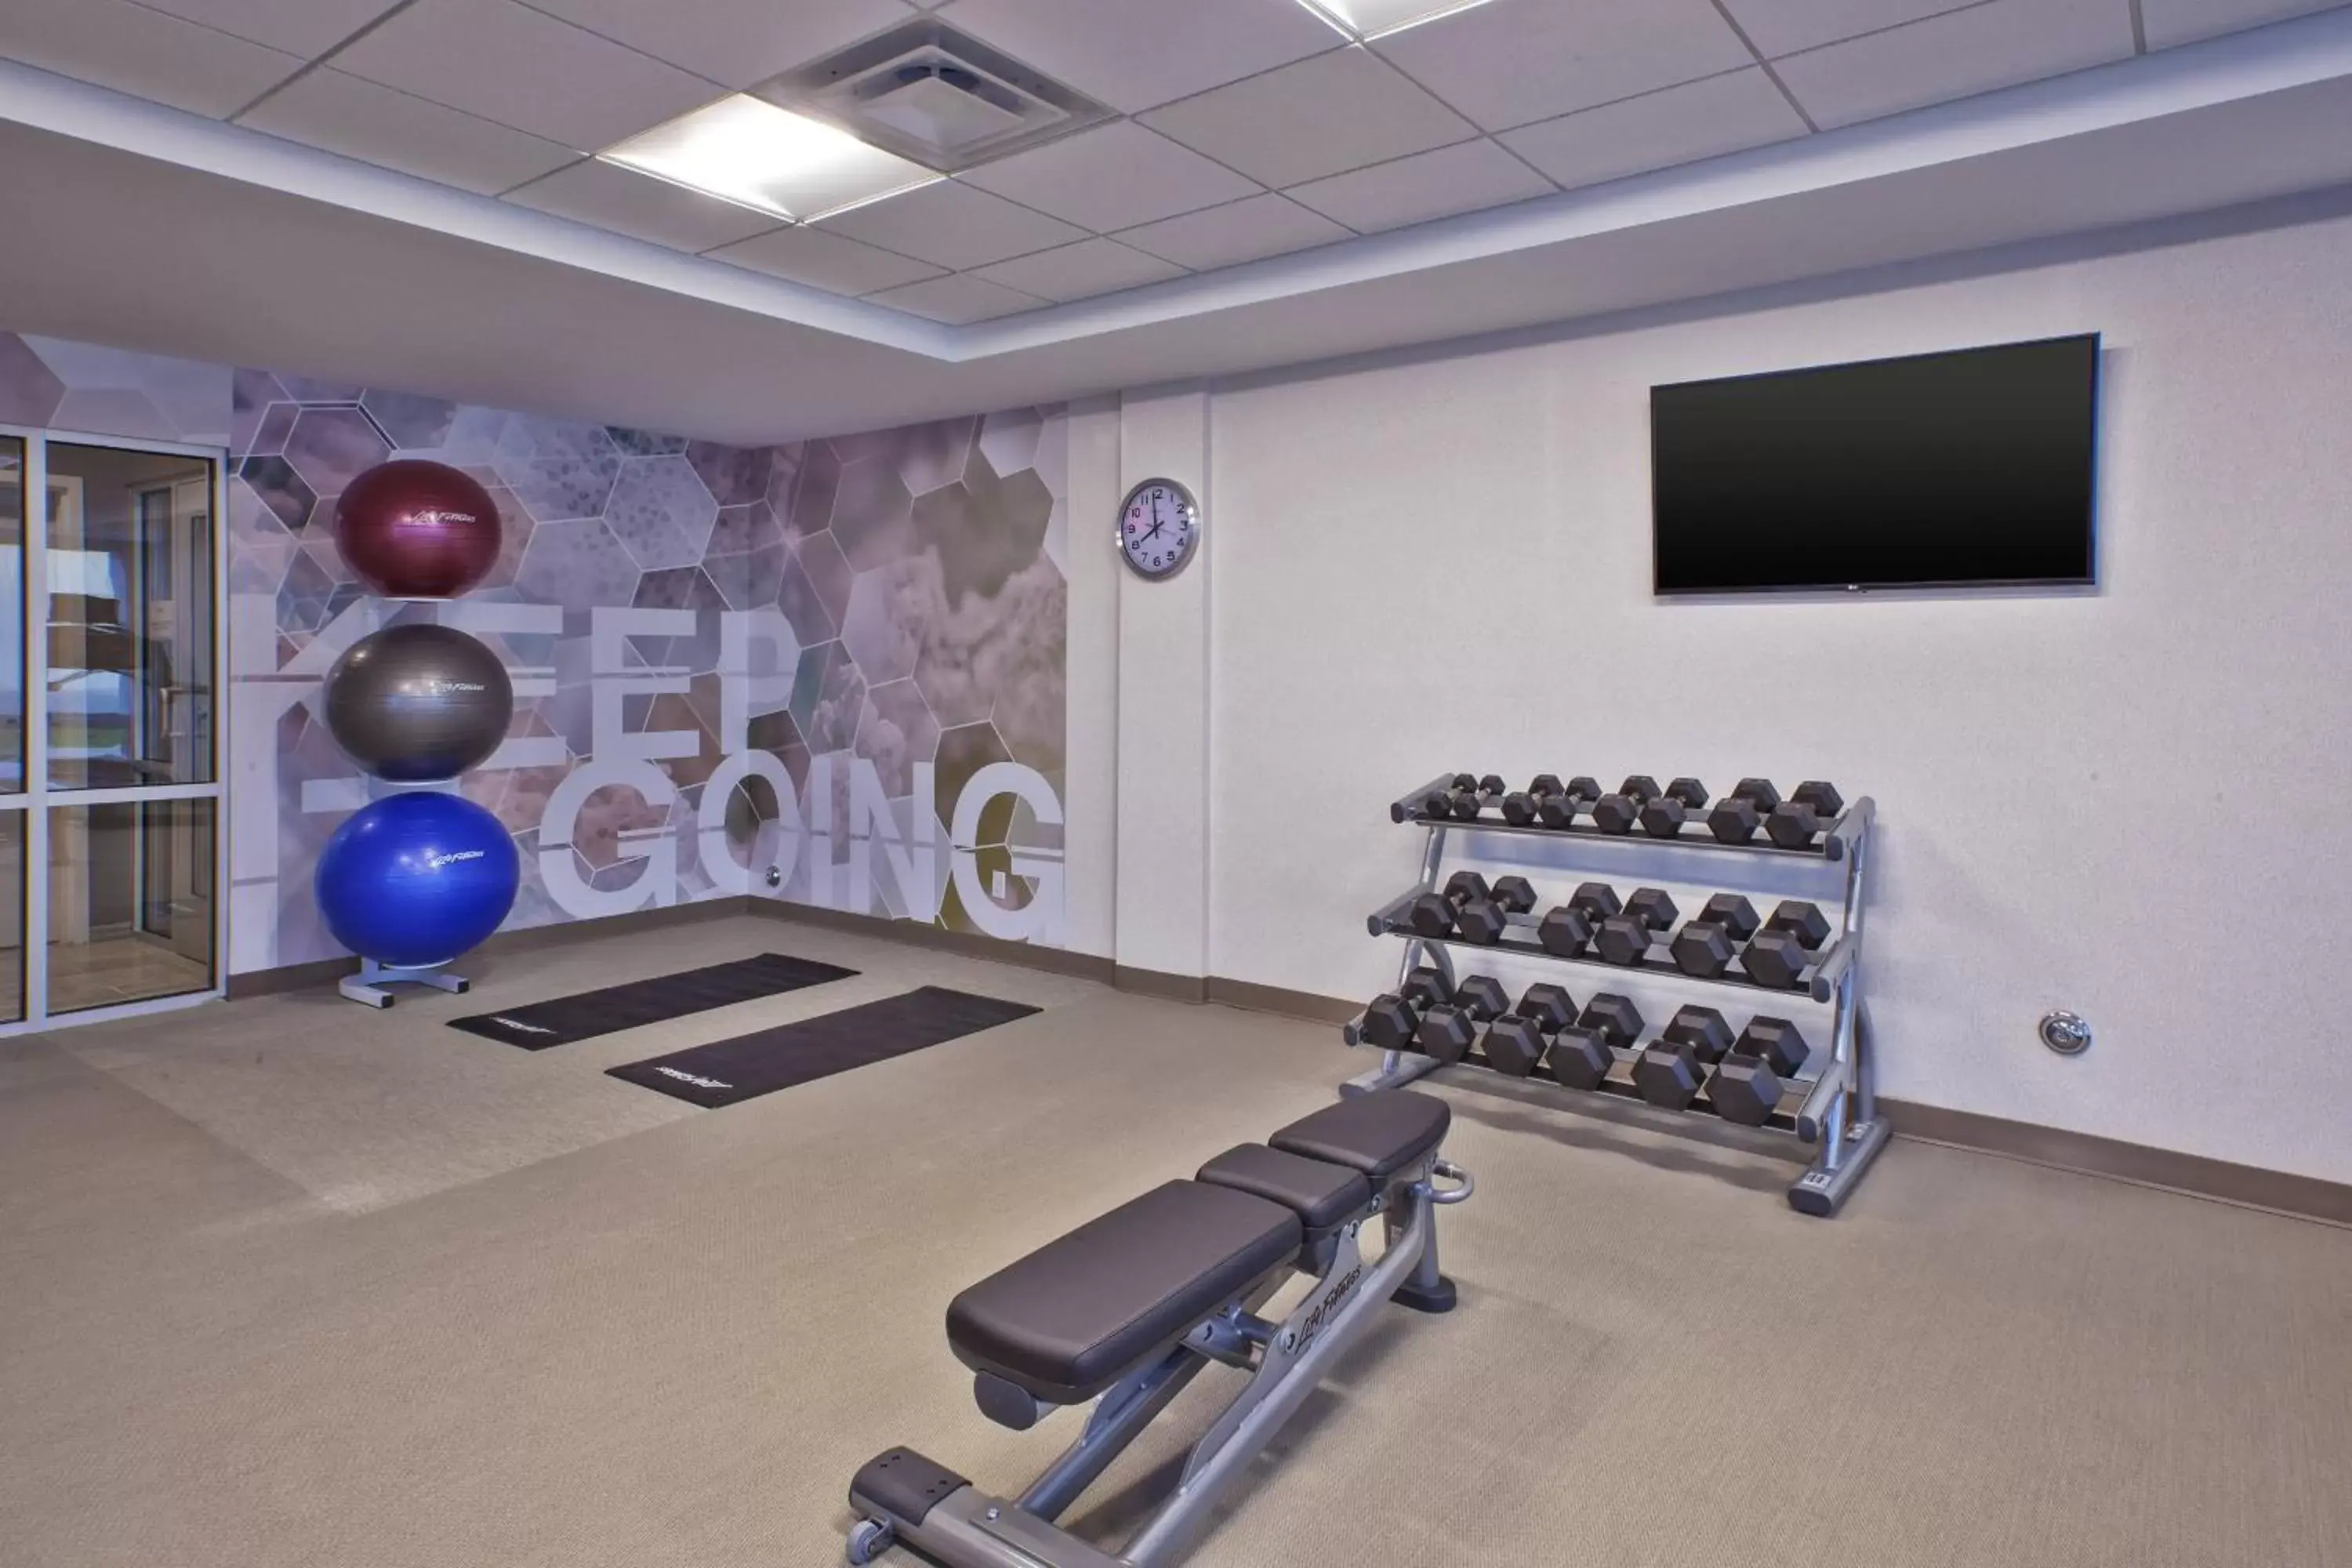 Fitness centre/facilities, Fitness Center/Facilities in SpringHill Suites by Marriott St. Joseph Benton Harbor